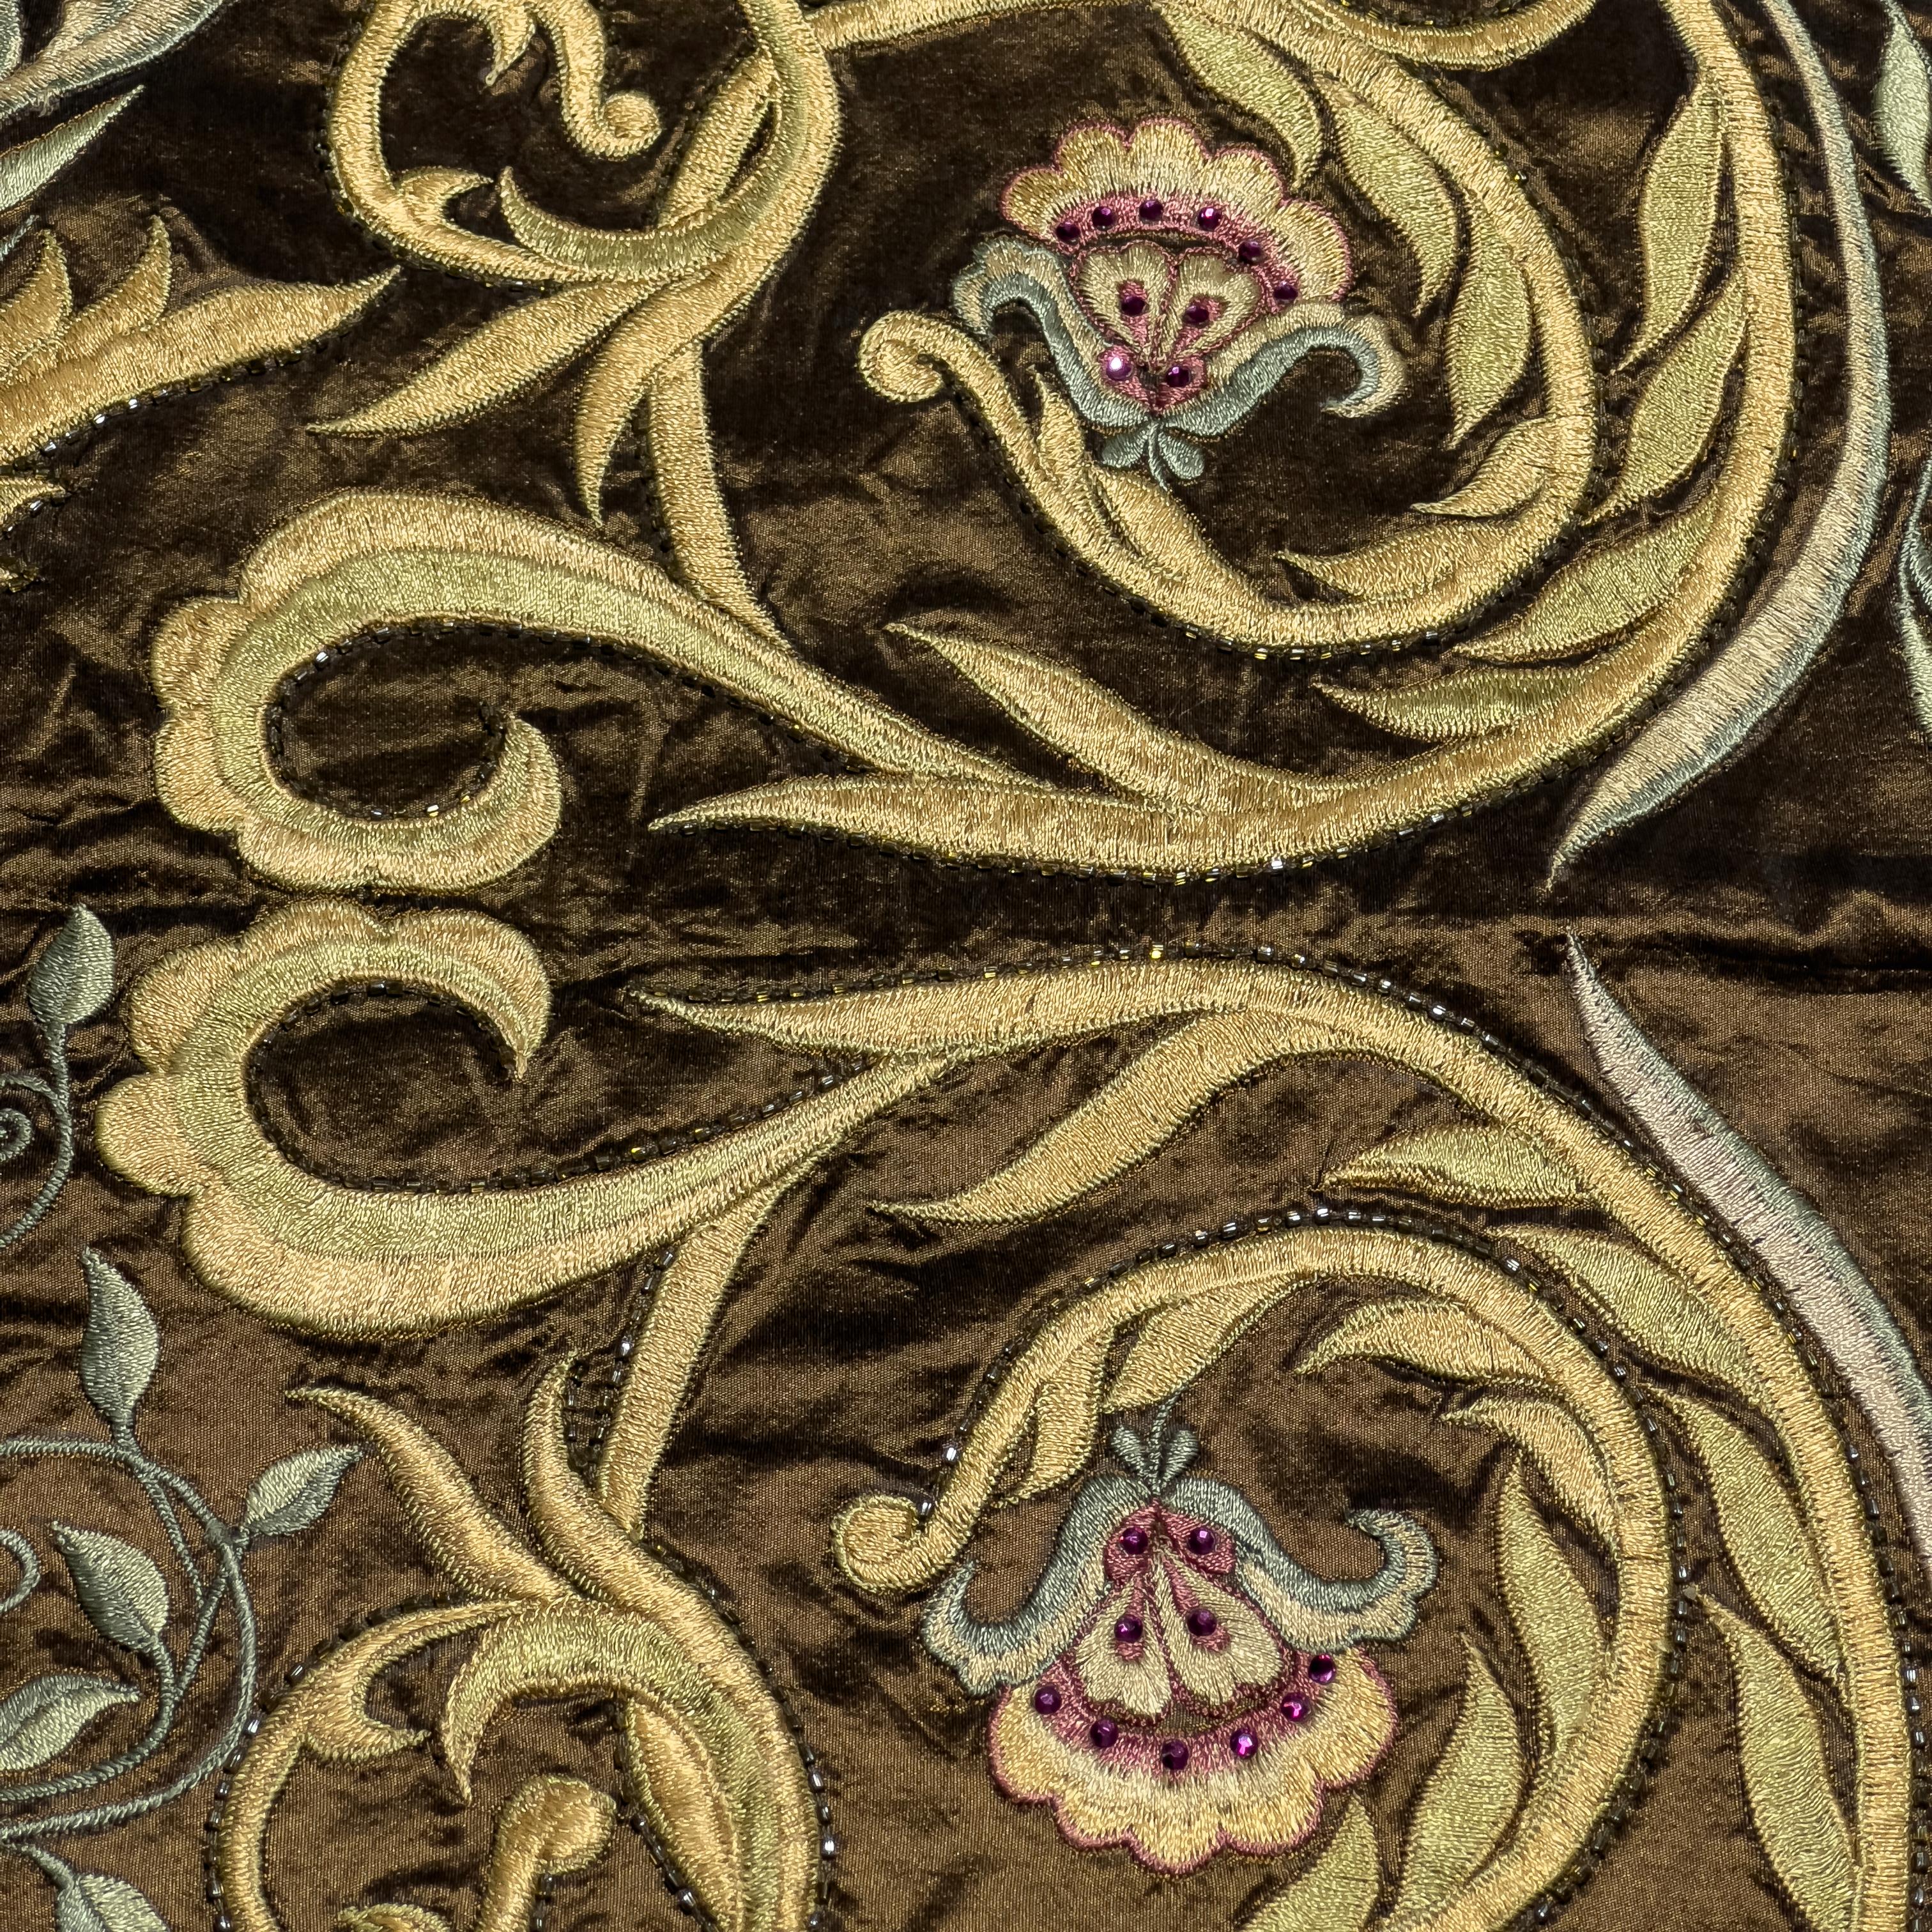 Jaali: Phulwari (Flower Garden) - Embroidered Tapestry Wall Hanging  - Other Art Style Art by Shabbir Merchant